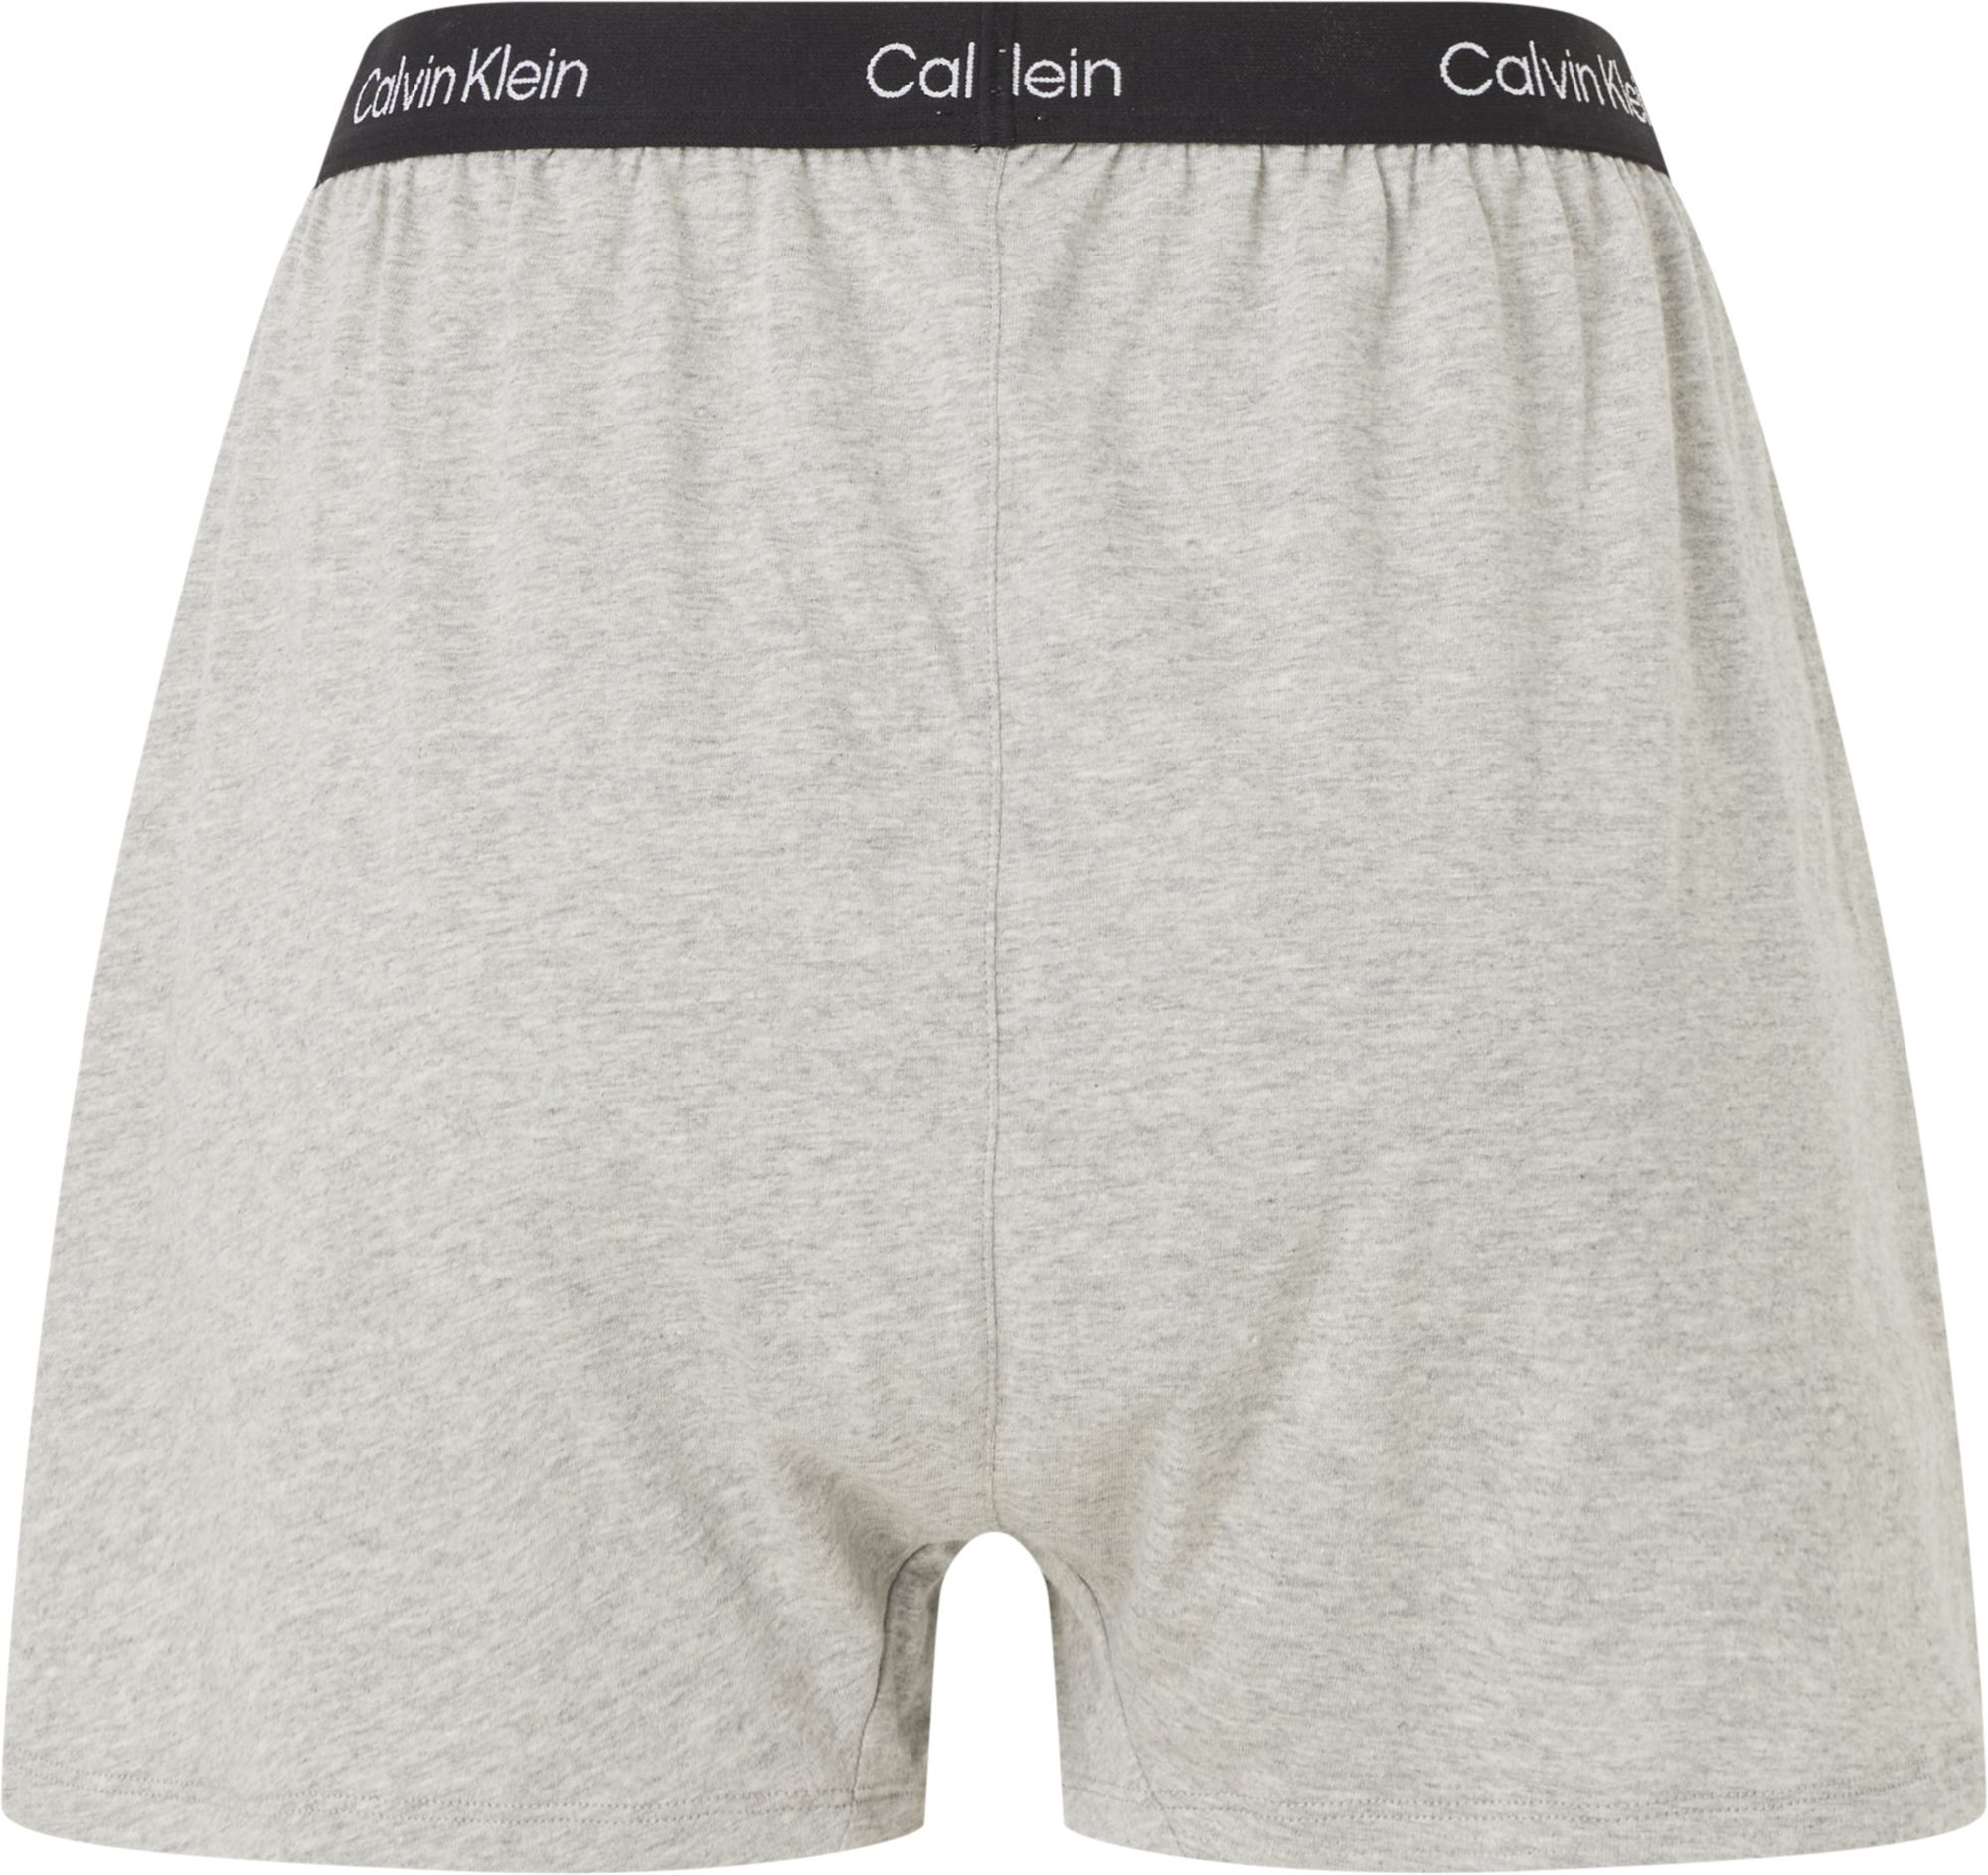 Spodní prádlo Dámské šortky SLEEP SHORT 000QS6947EP7A - Calvin Klein L